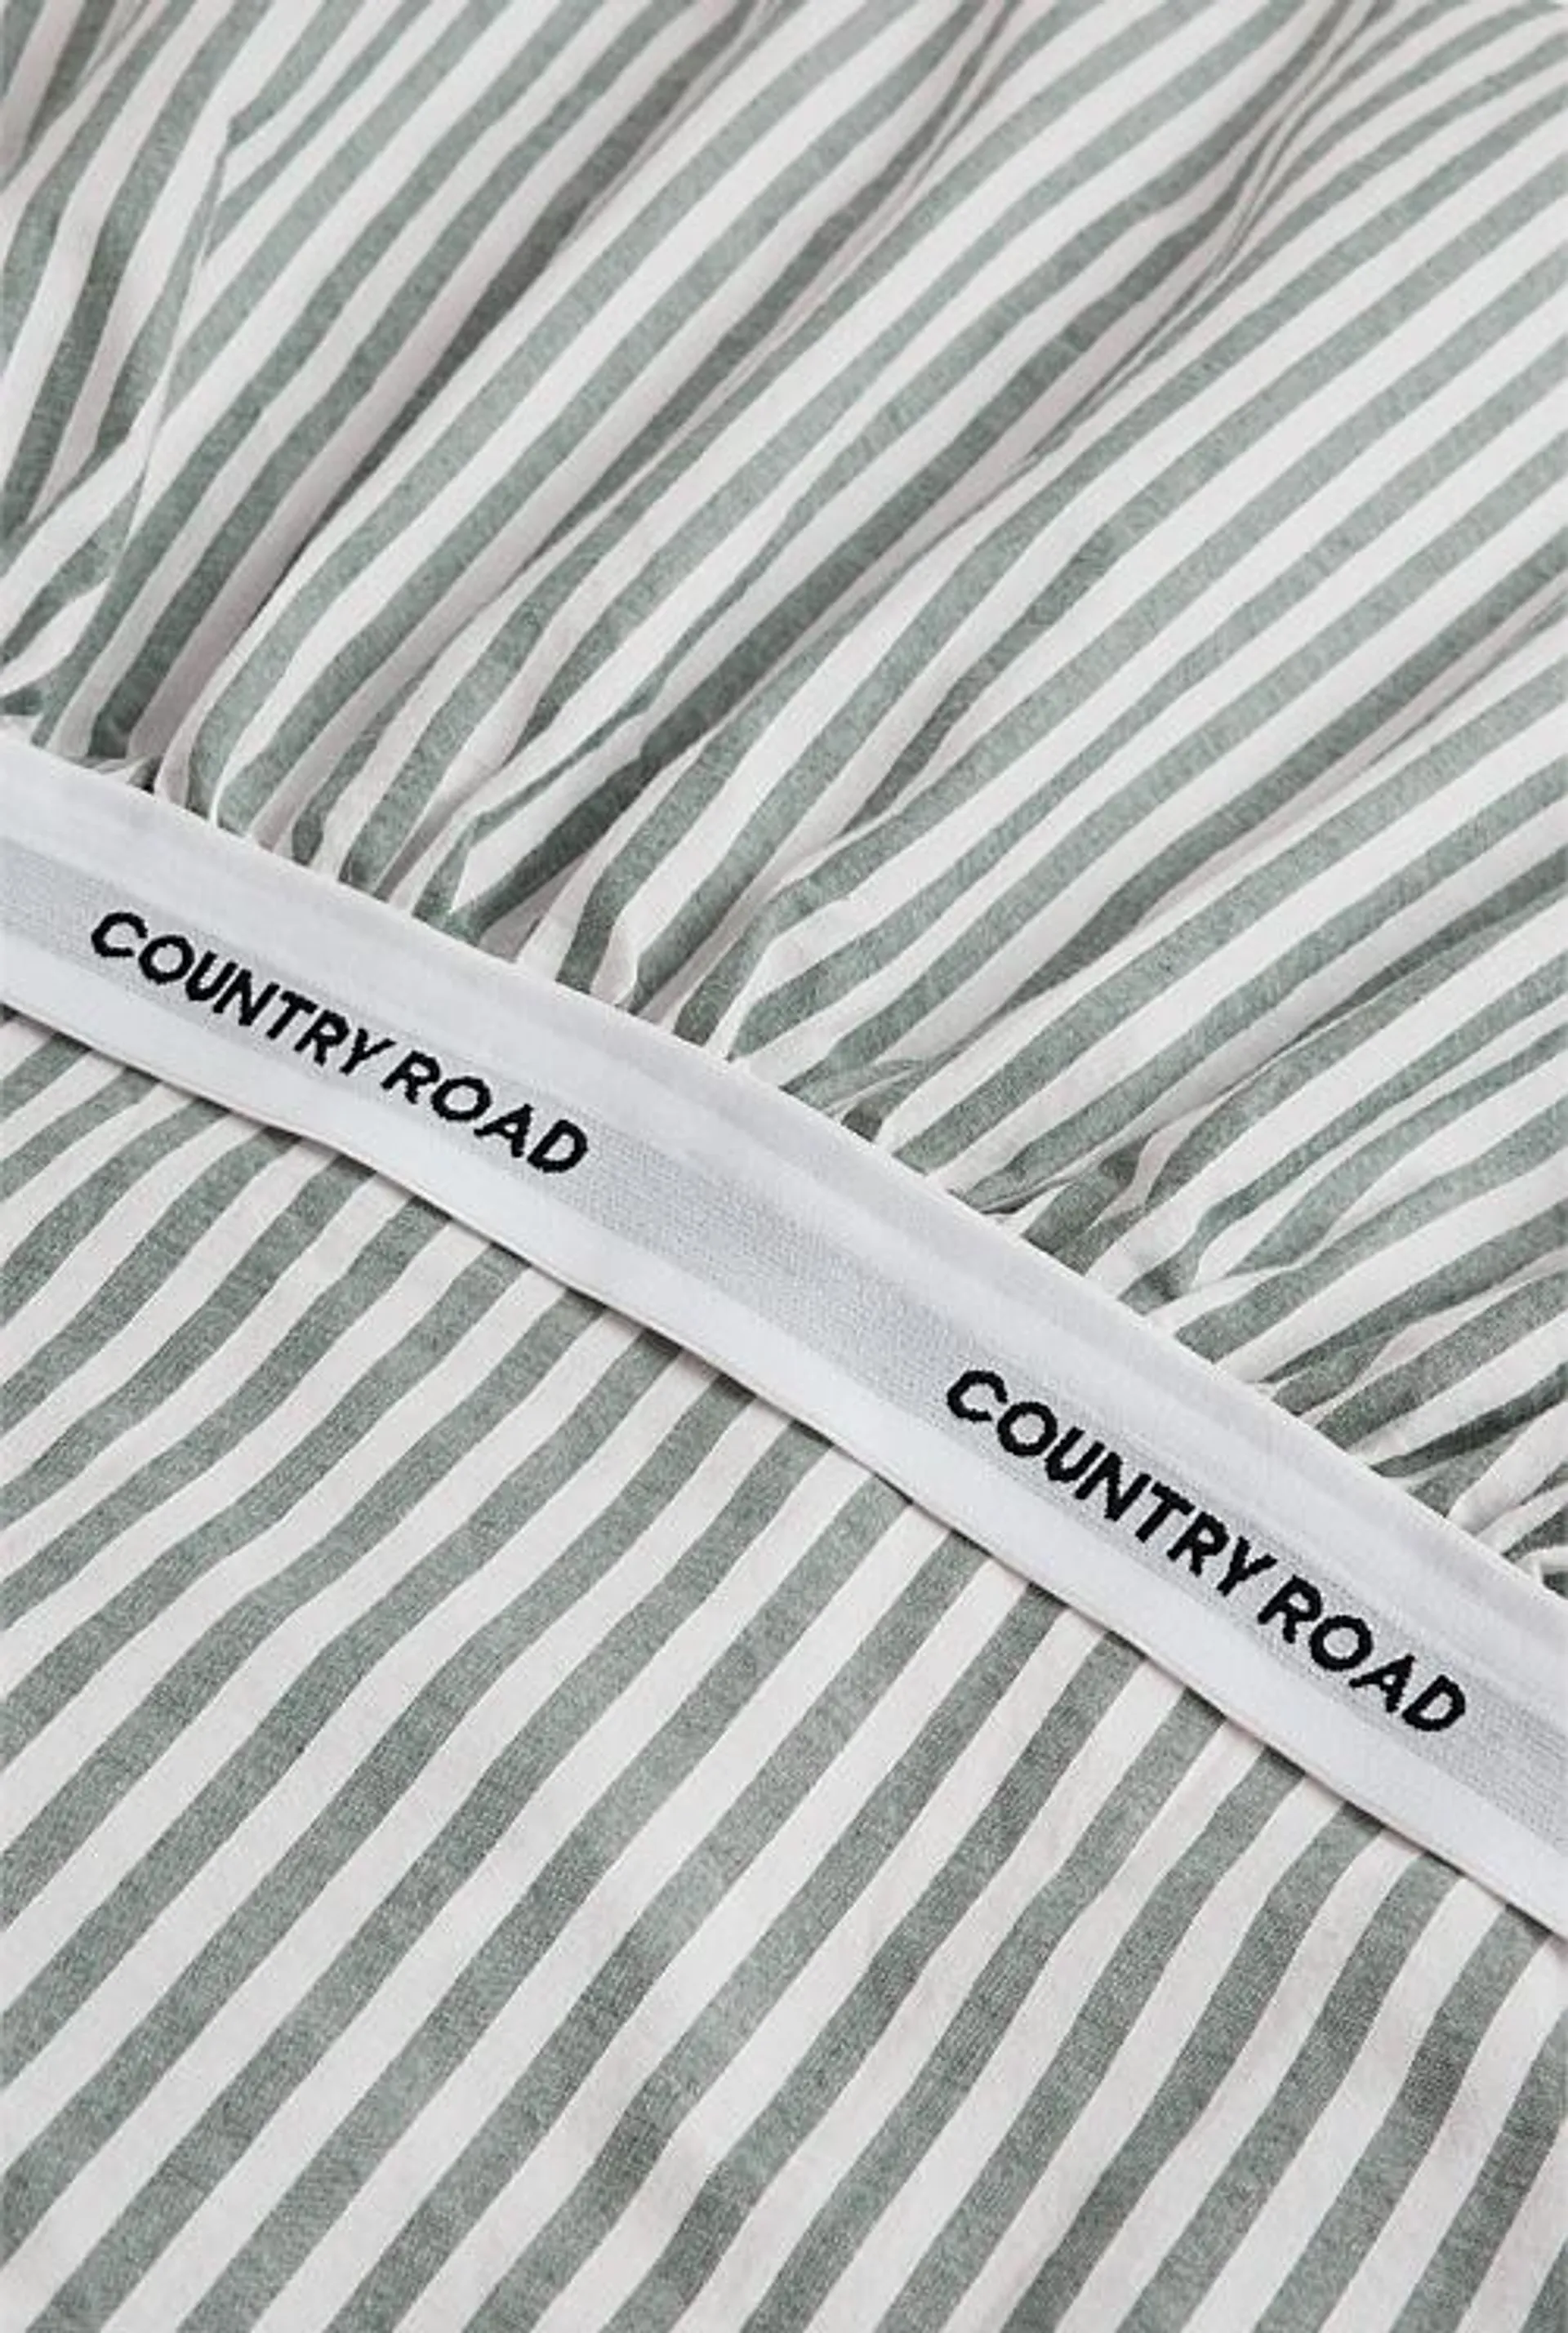 Brae Australian Cotton Stripe King Single Fitted Sheet